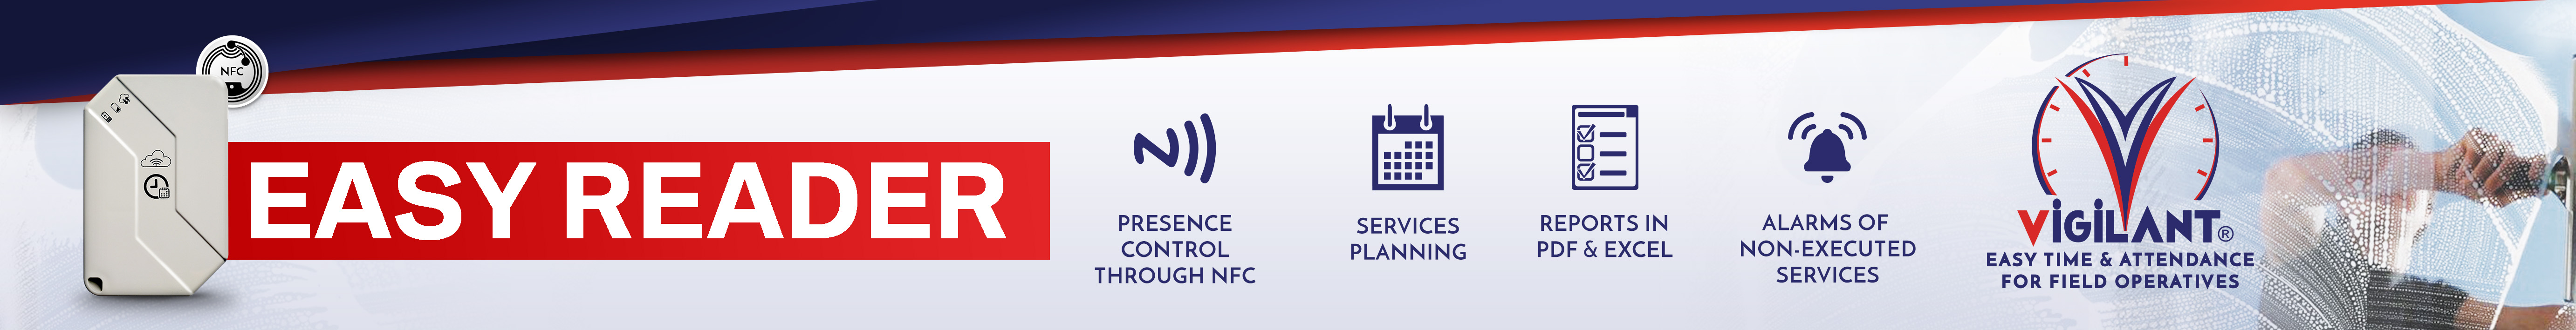 EASY READER - Presence Control through NFC - Services Planning - Vigilant